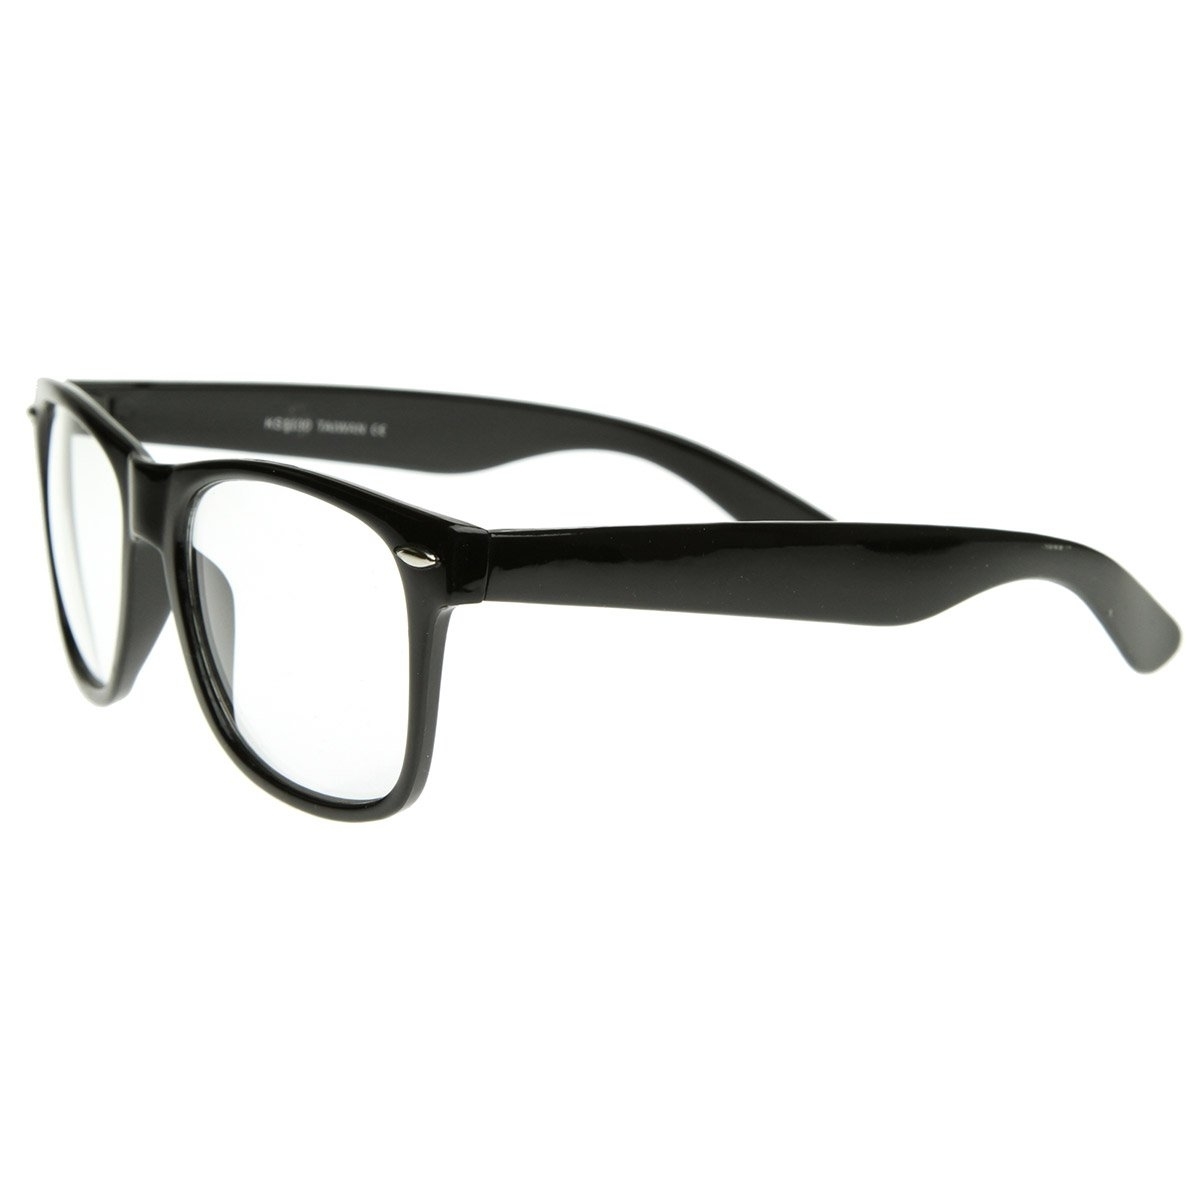 Vintage Inspired Eyewear Original Geek Nerd Clear Lens Horn Rimmed Glasses - Yellow Tortoise